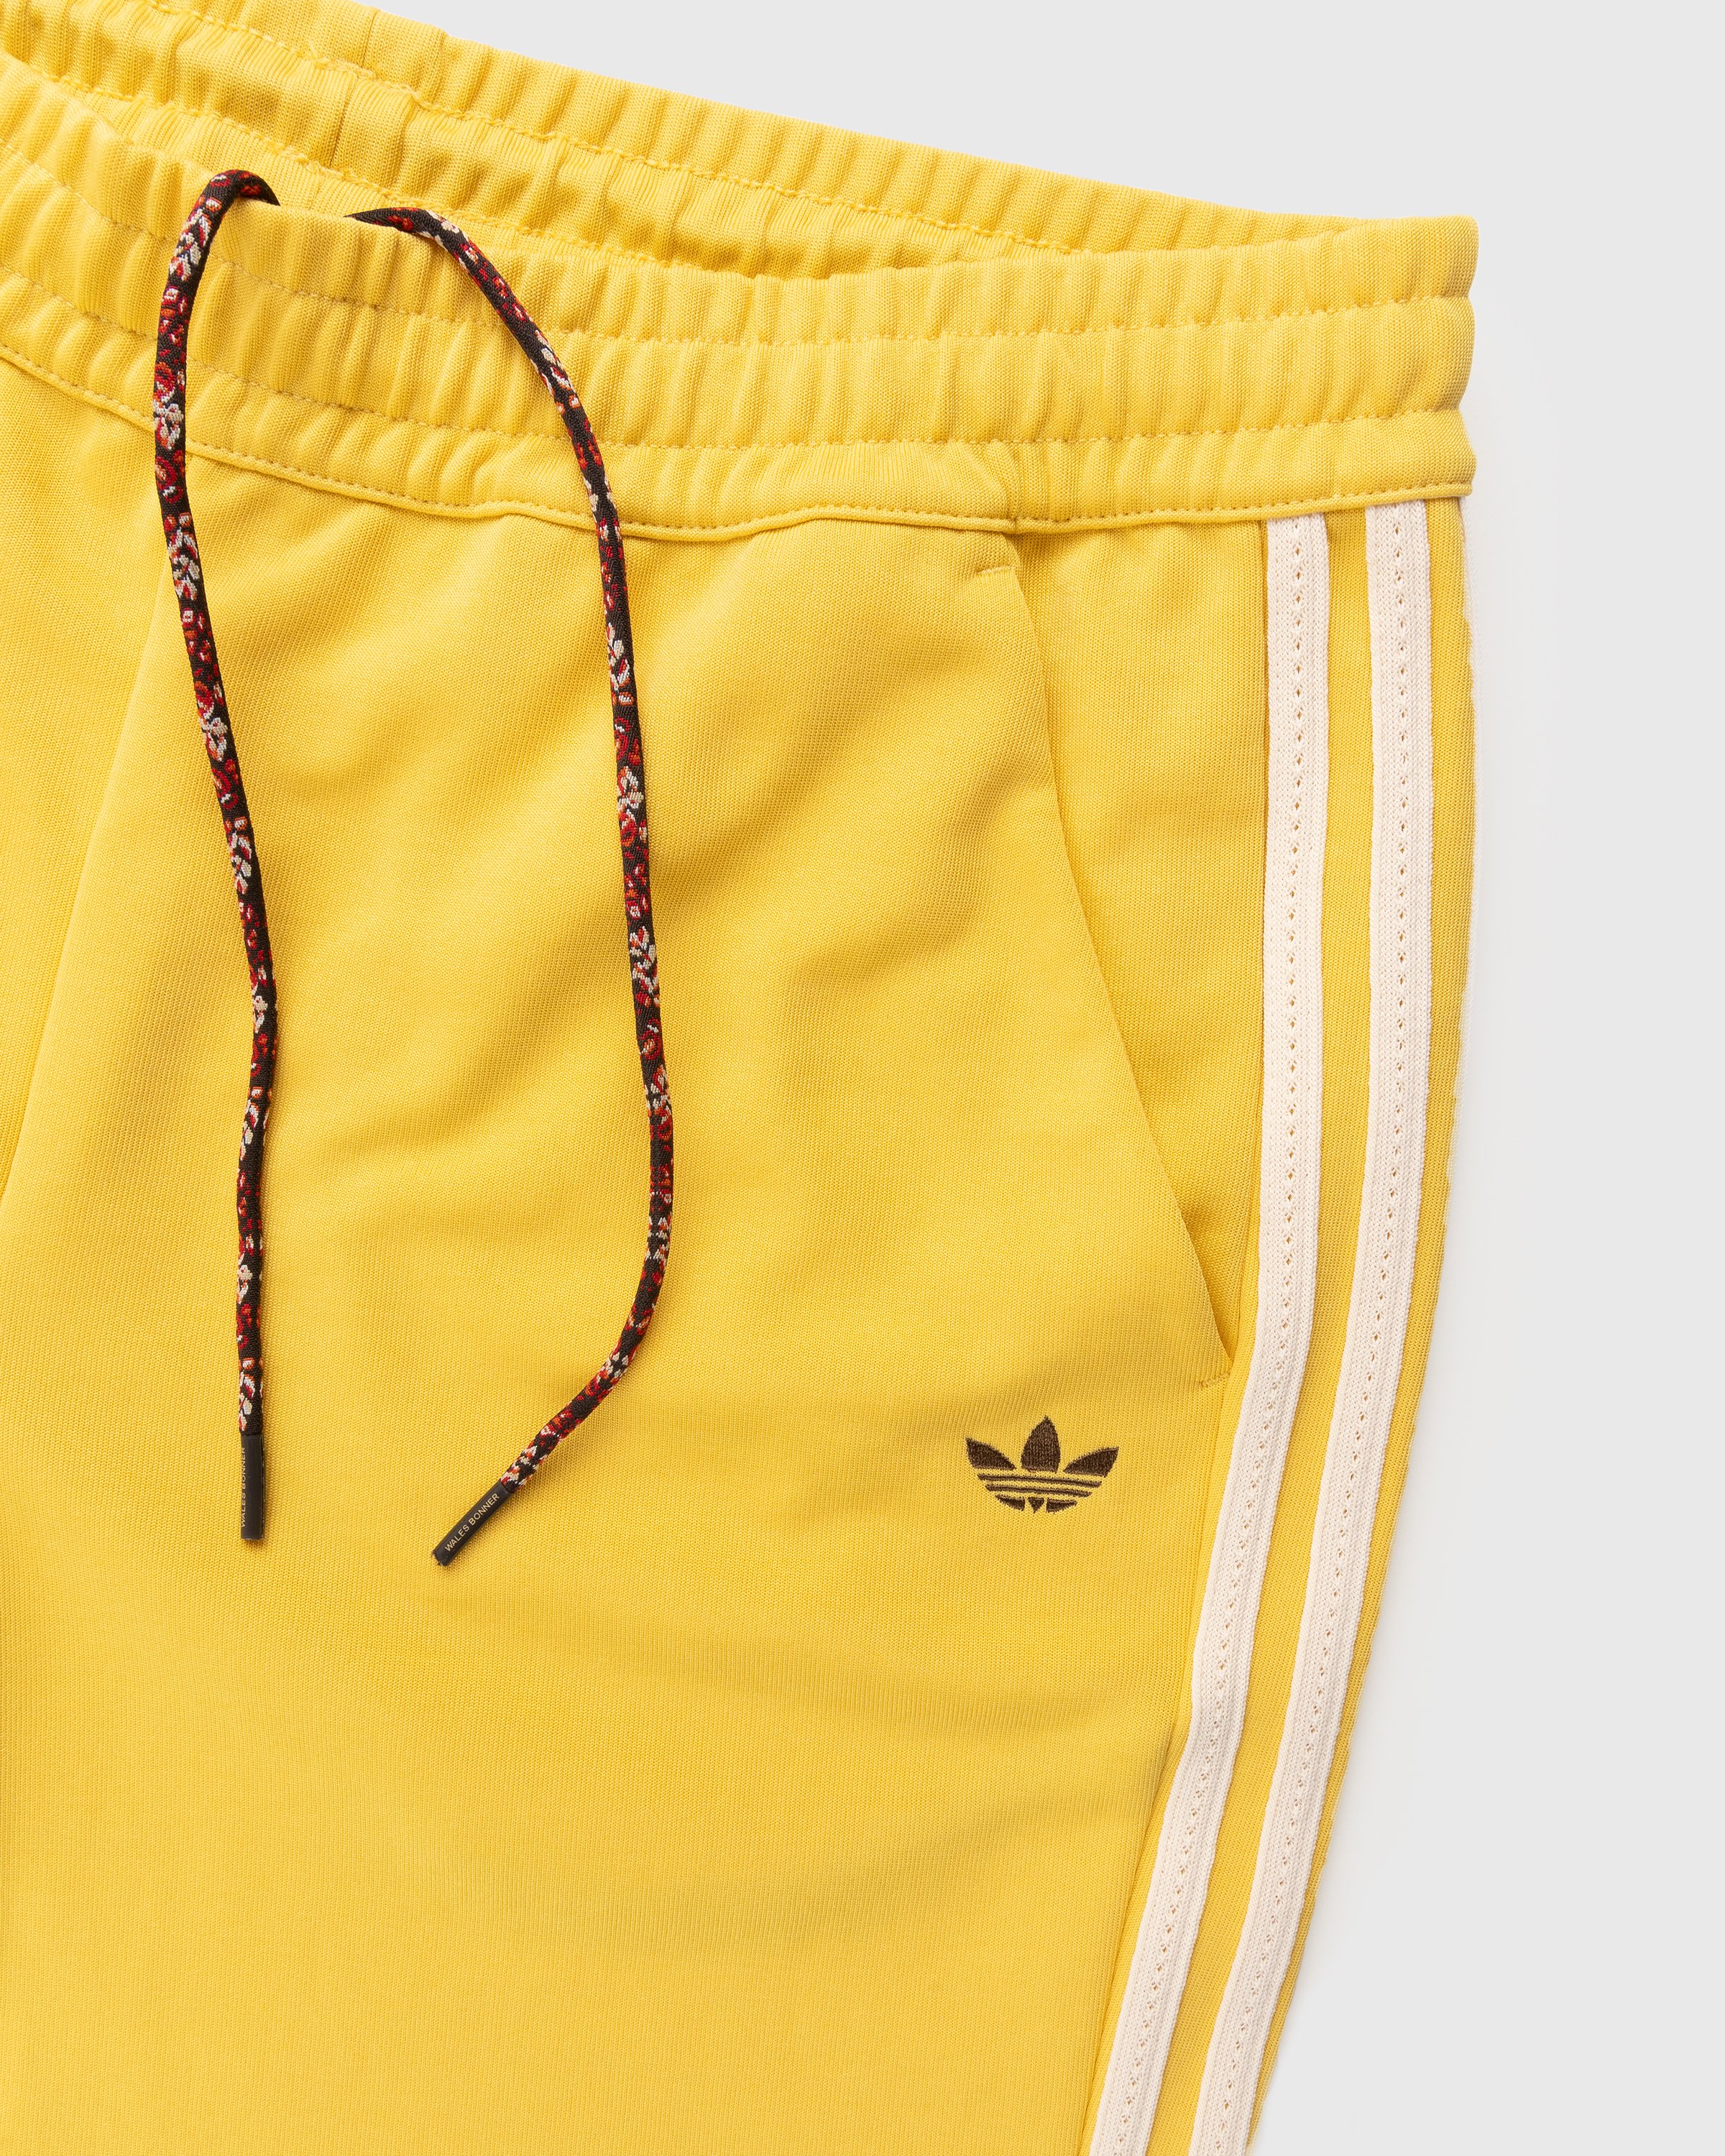 Adidas x Wales Bonner - WB Track Pants St Fade Gold - Clothing - Yellow - Image 3